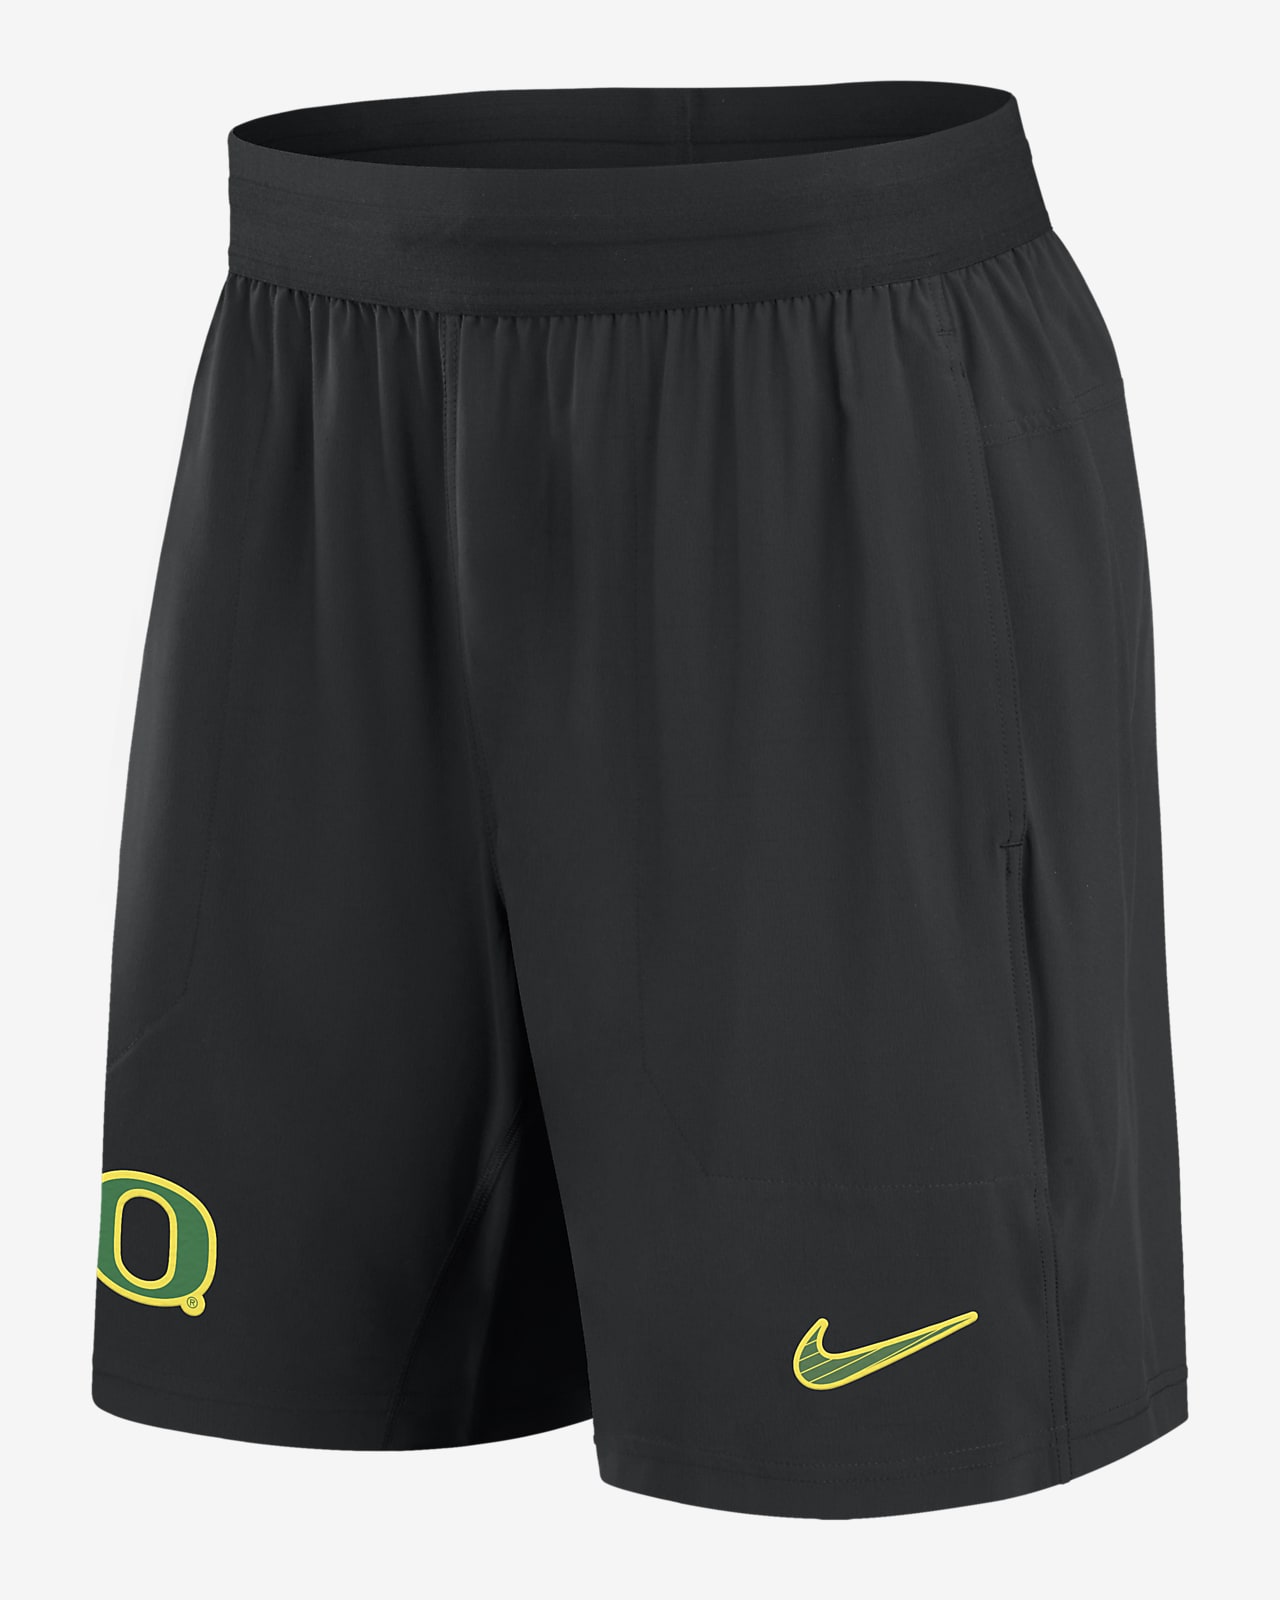 Shorts universitarios Nike Dri-FIT para hombre Oregon Ducks Sideline